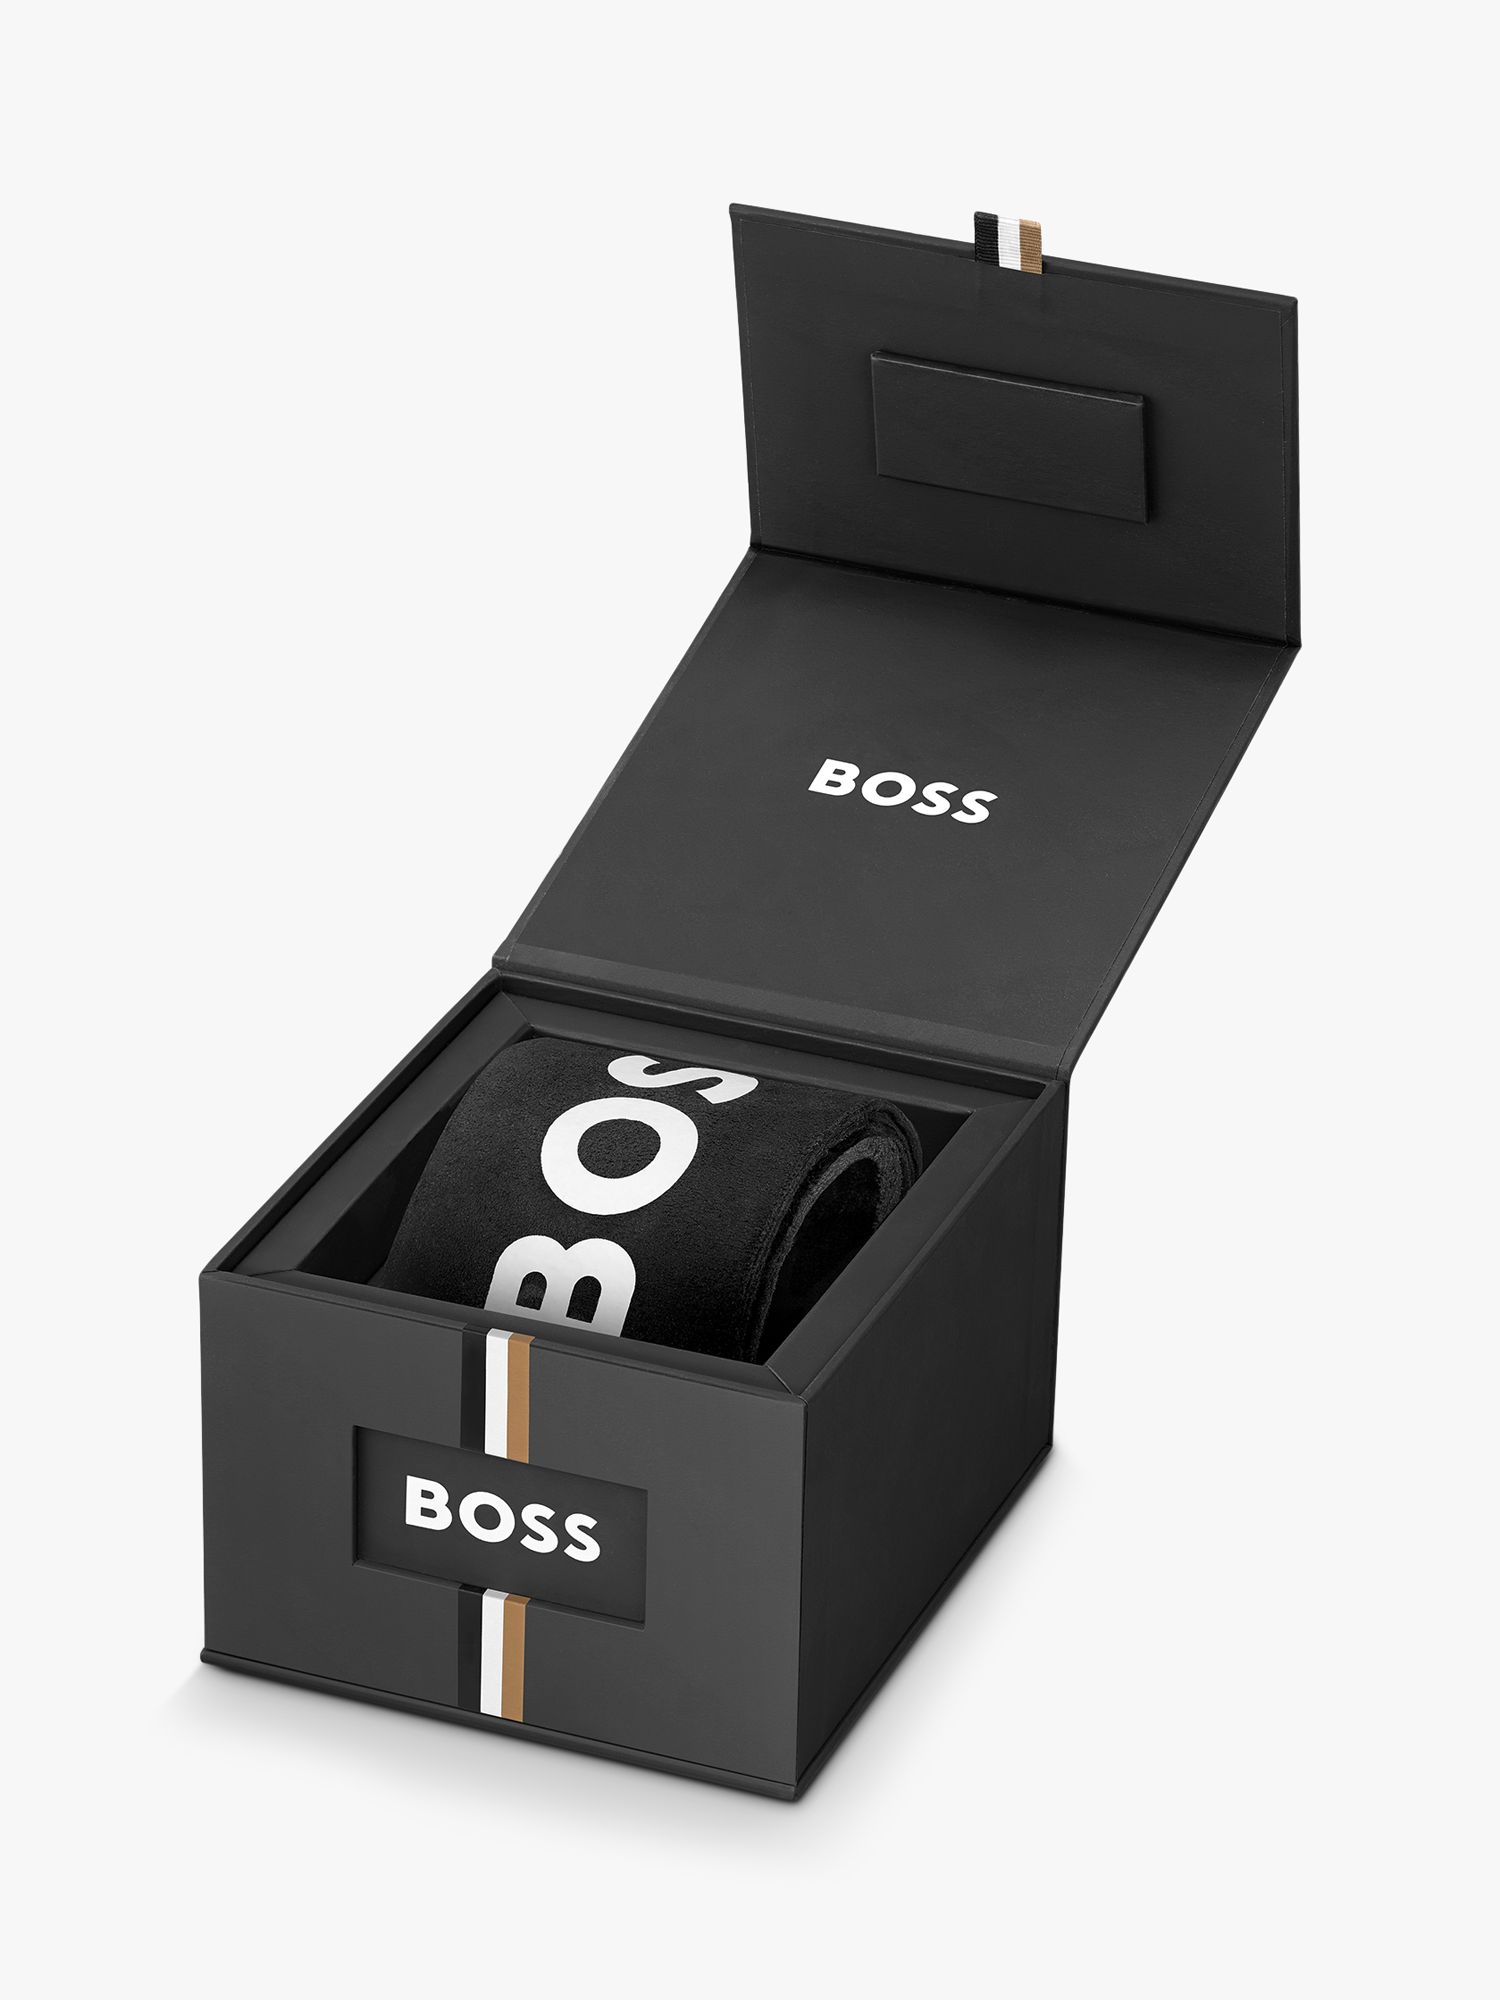 Buy BOSS 1514135 Men's Principle Bracelet Strap Watch, Silver/Gold Online at johnlewis.com